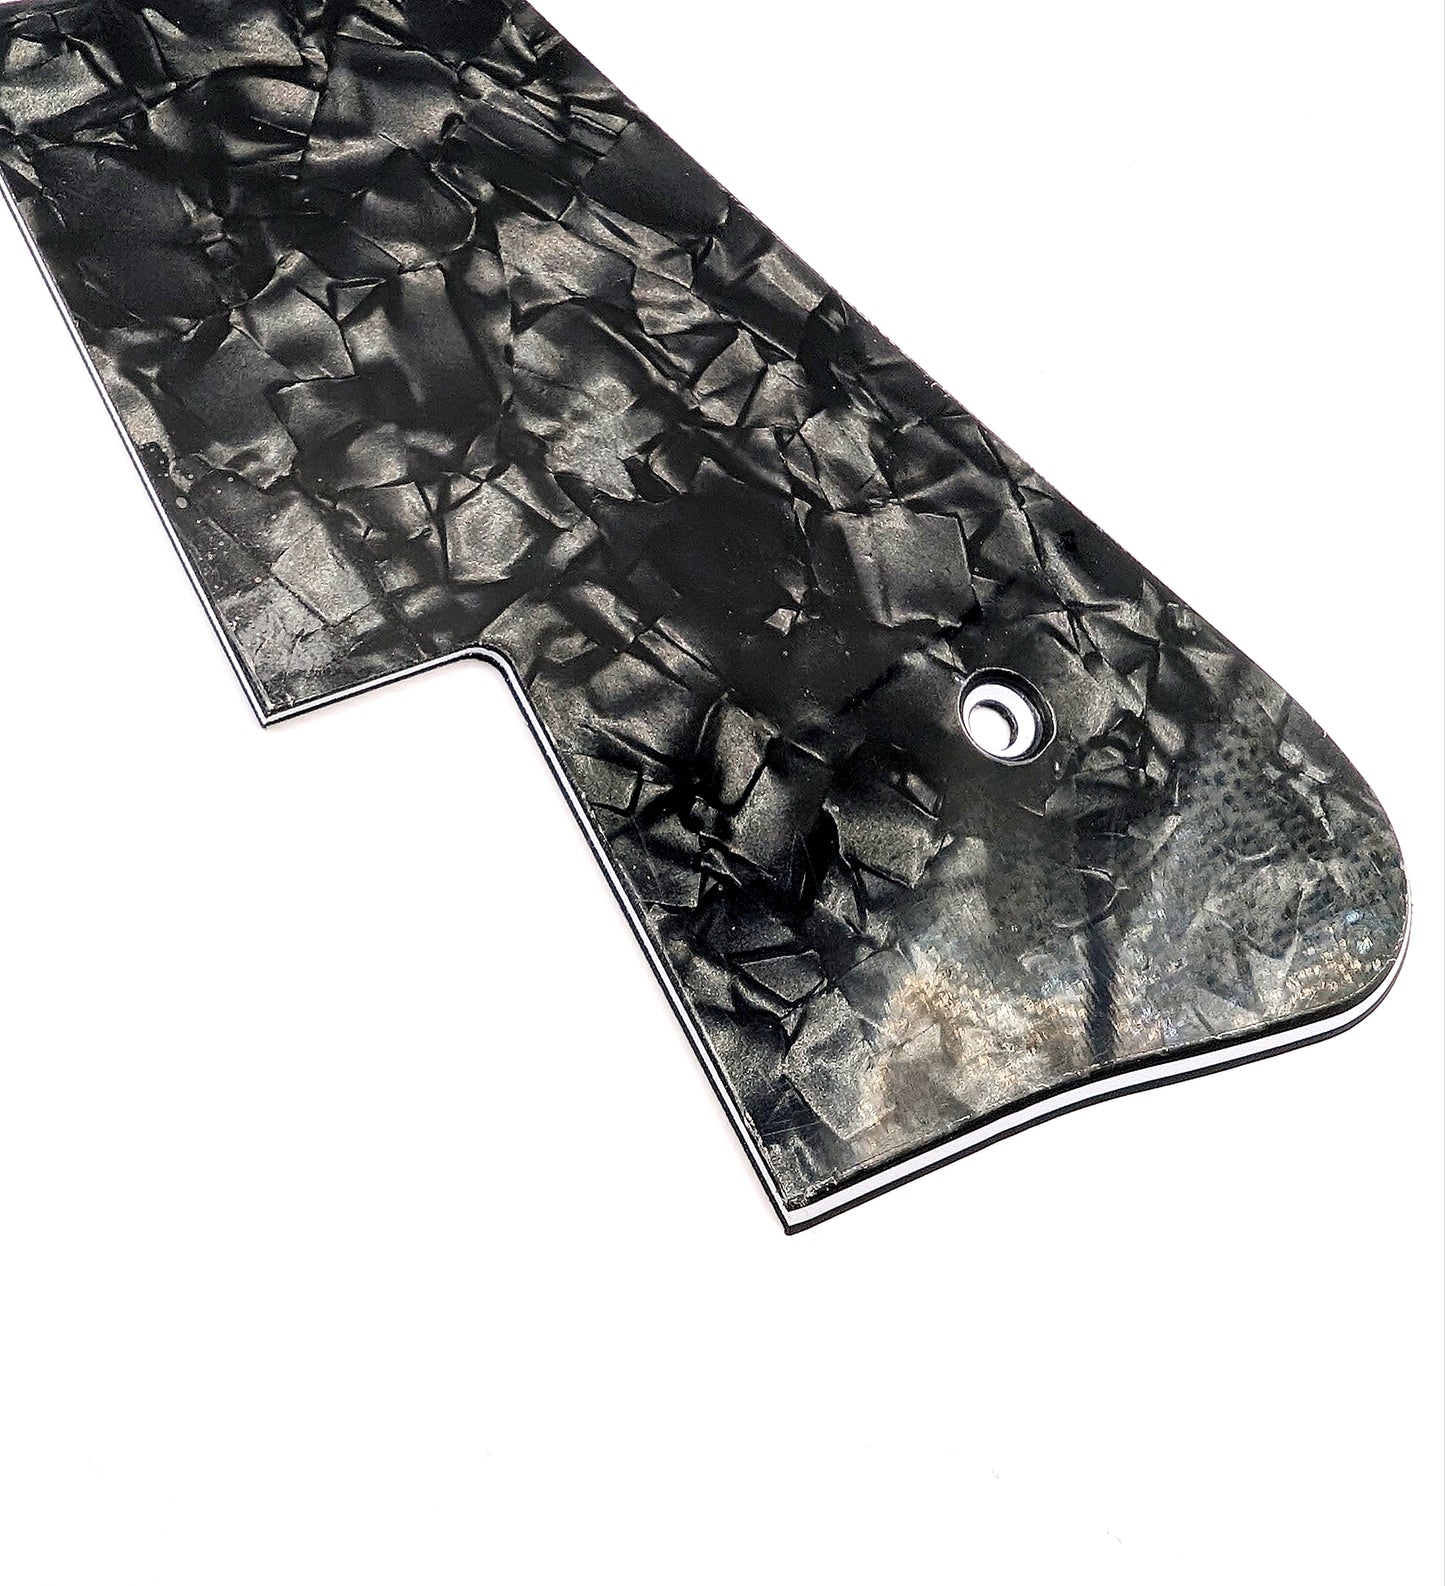 Les Paul Epiphone 4ply black pearl scratch plate pickguard